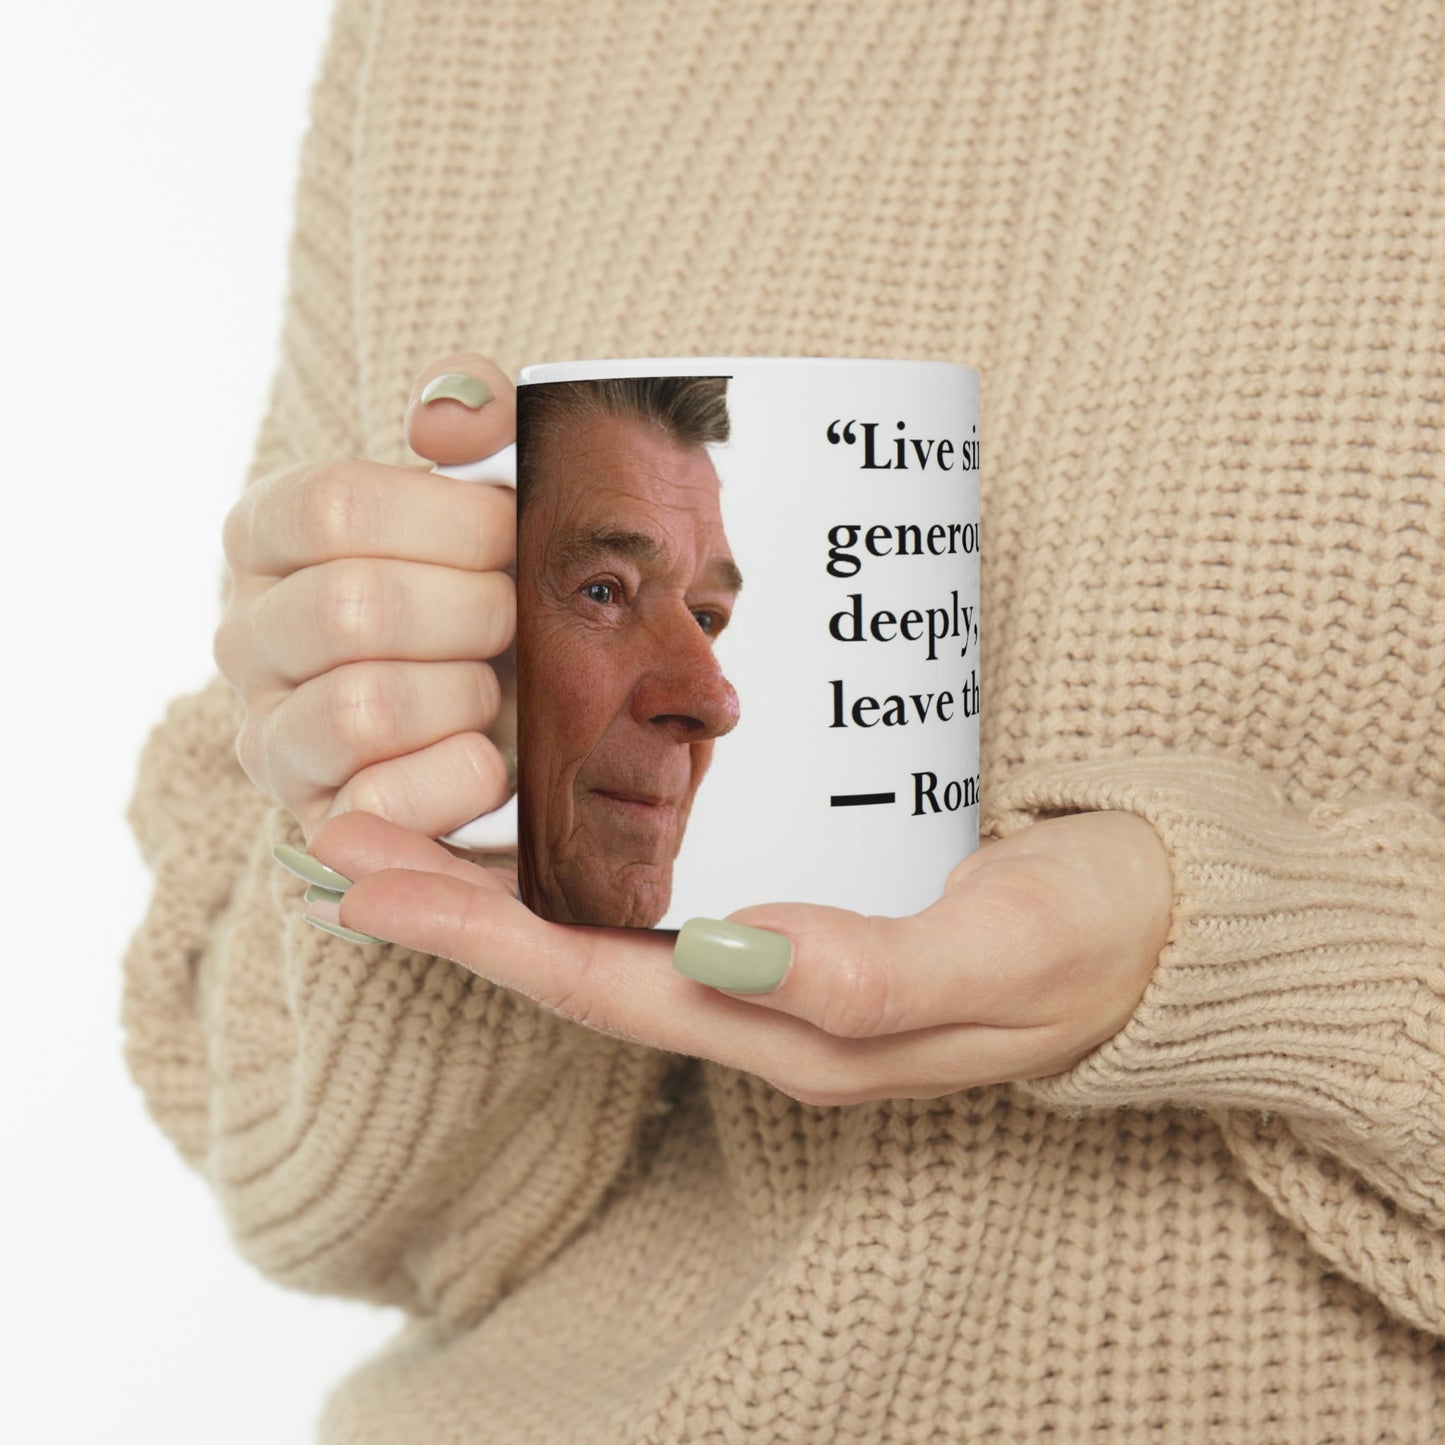 Ronald Reagan Collection Live simply, love generously Ceramic Mug 11oz